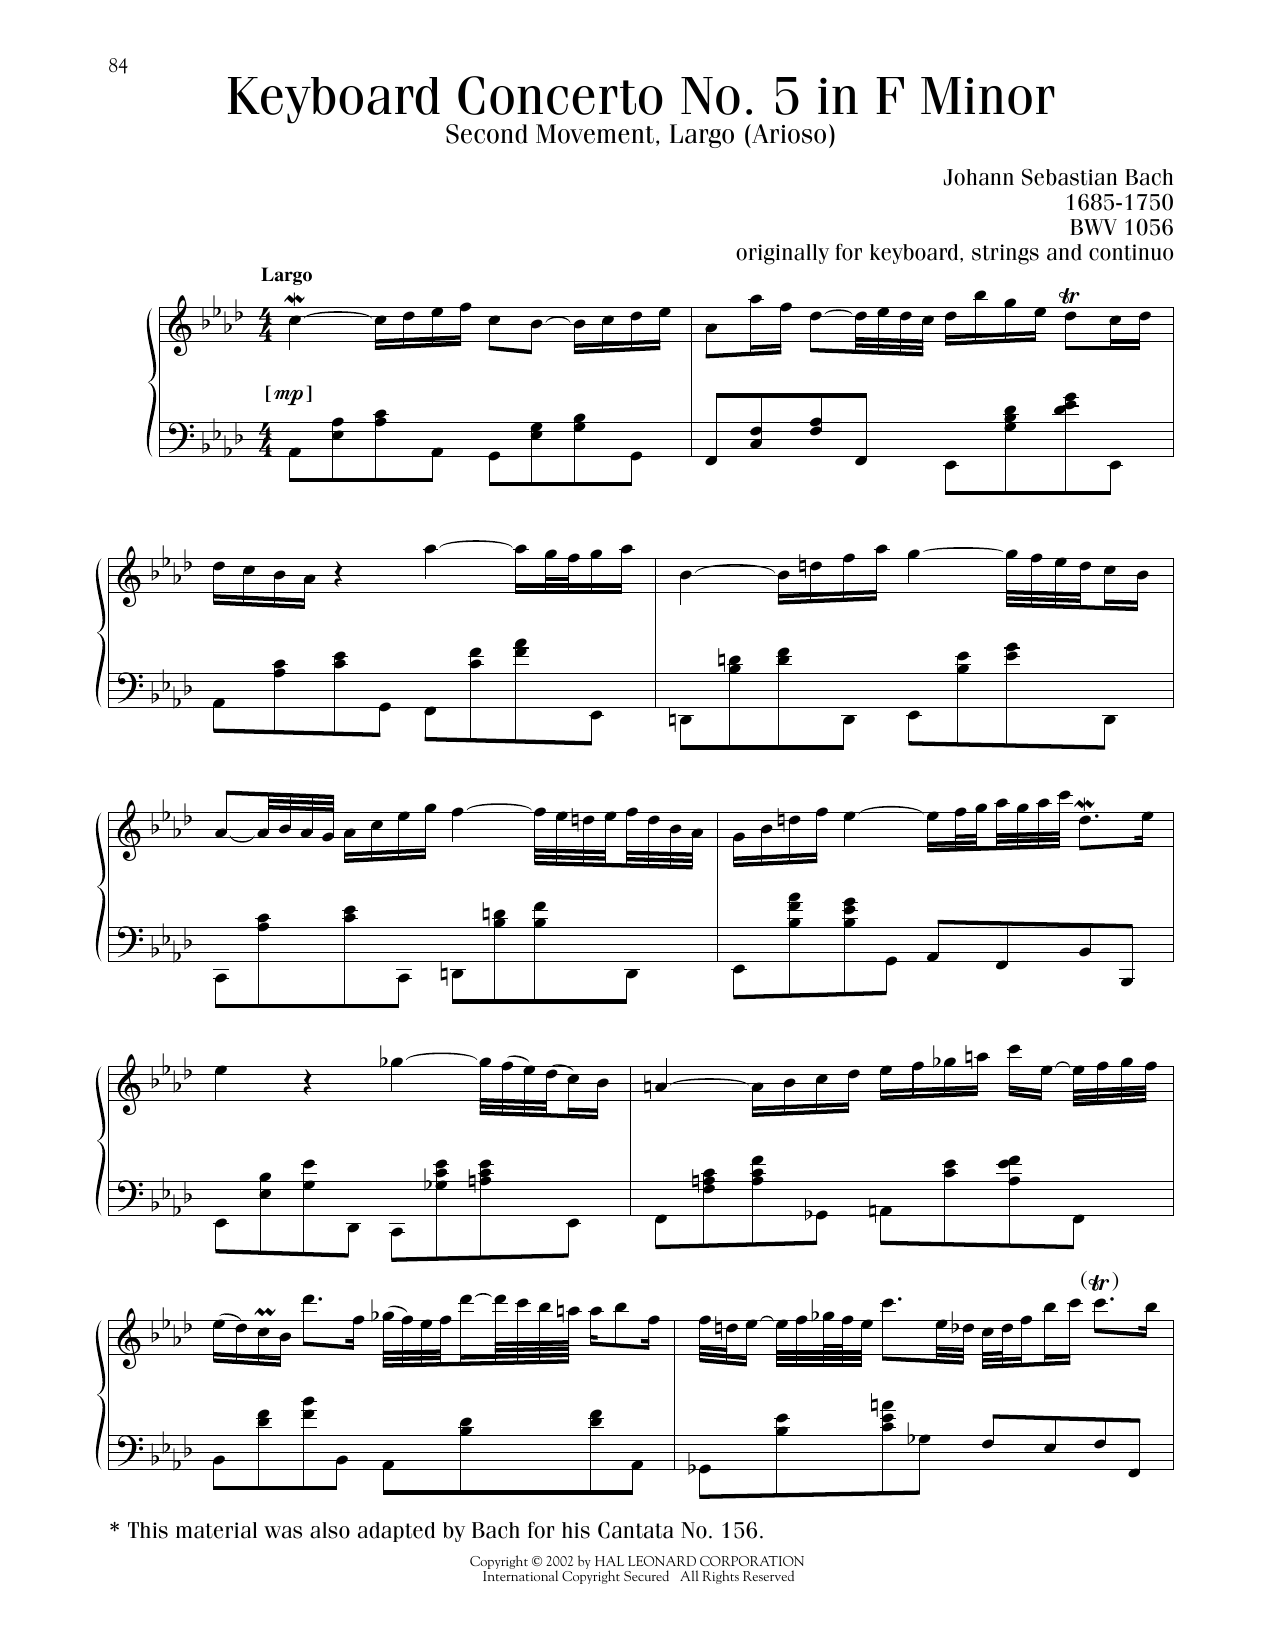 Johann Sebastian Bach Piano Concerto No.5 In F Minor (BWV 1056-II: Largo) Sheet Music Notes & Chords for Piano Solo - Download or Print PDF